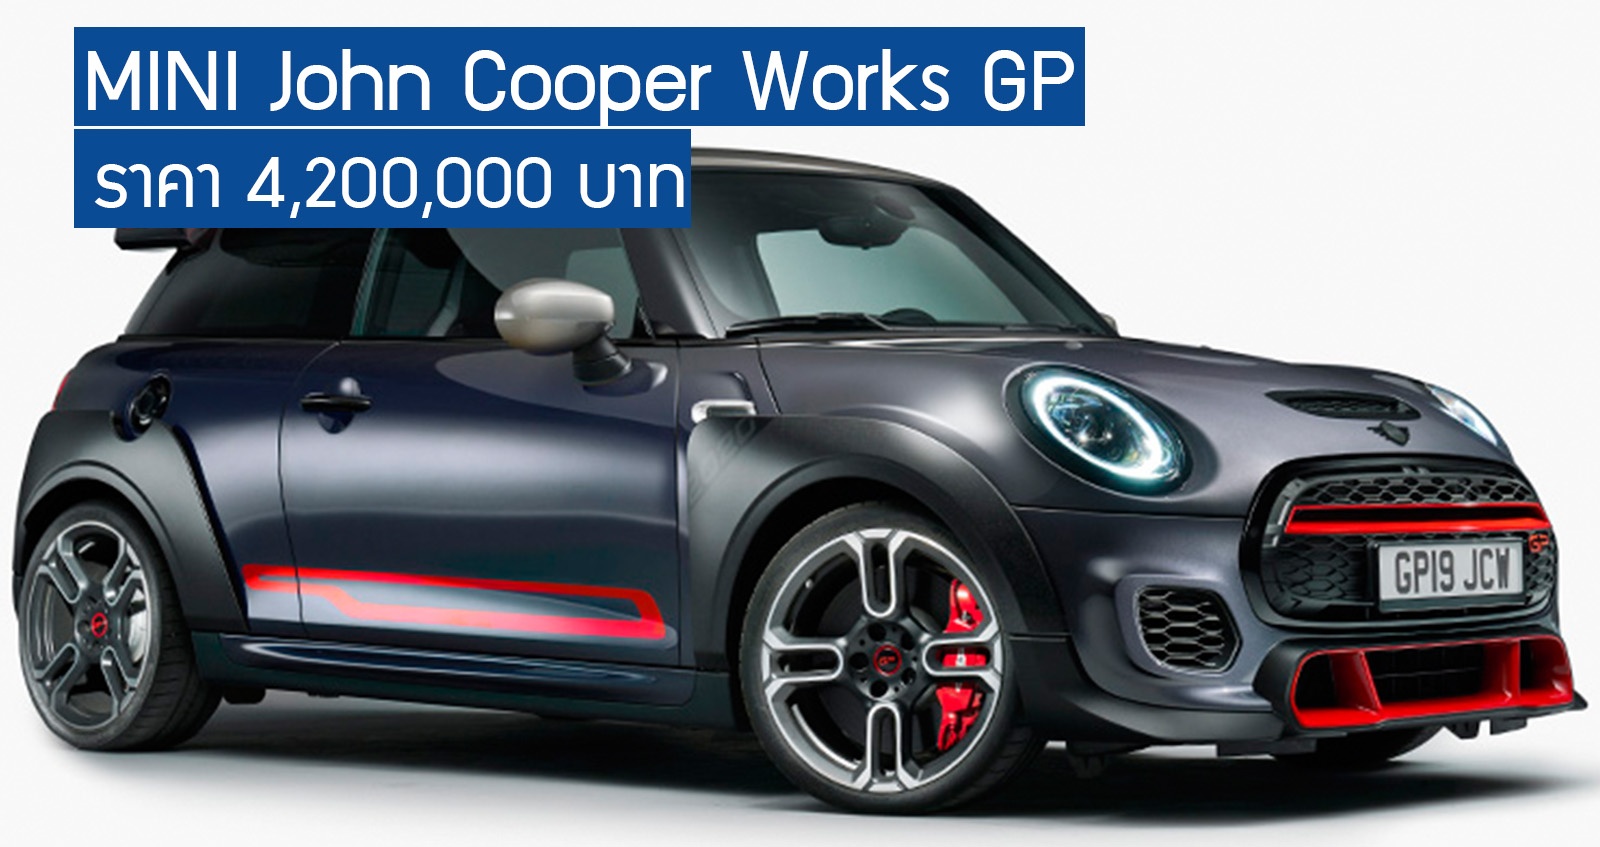 MINI John Cooper Works GP  ราคา 4,200,000 บาท + 2.0T 306 แรงม้า